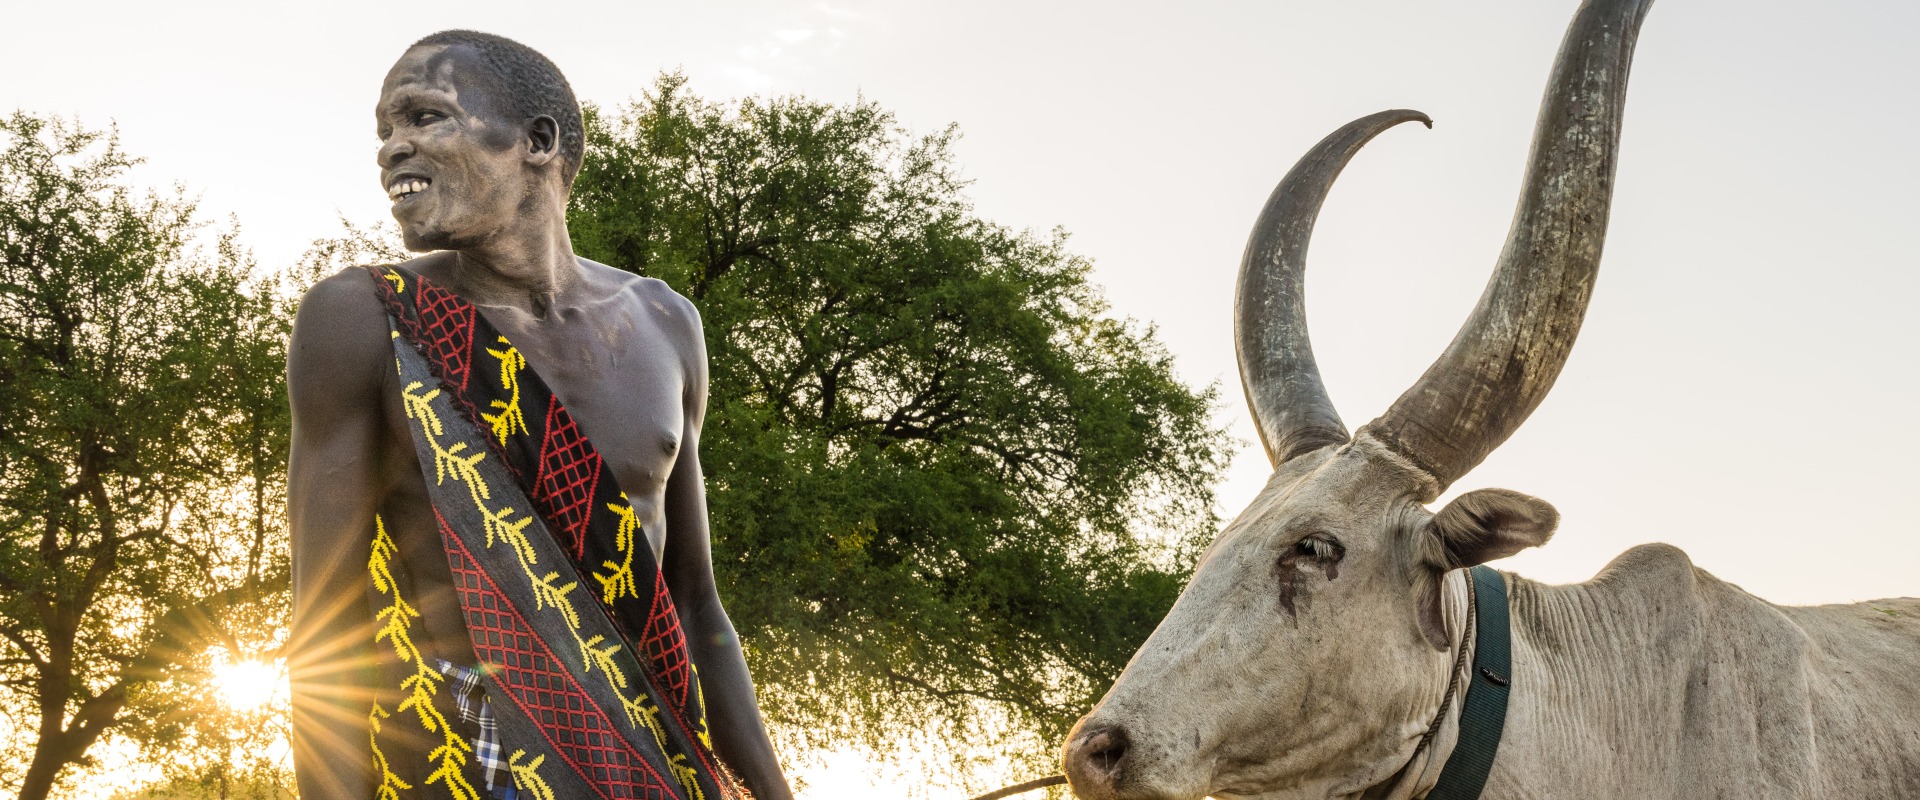 Tribesman from Community Bala Mundari, courtesy African Parks/Marcus Westberg